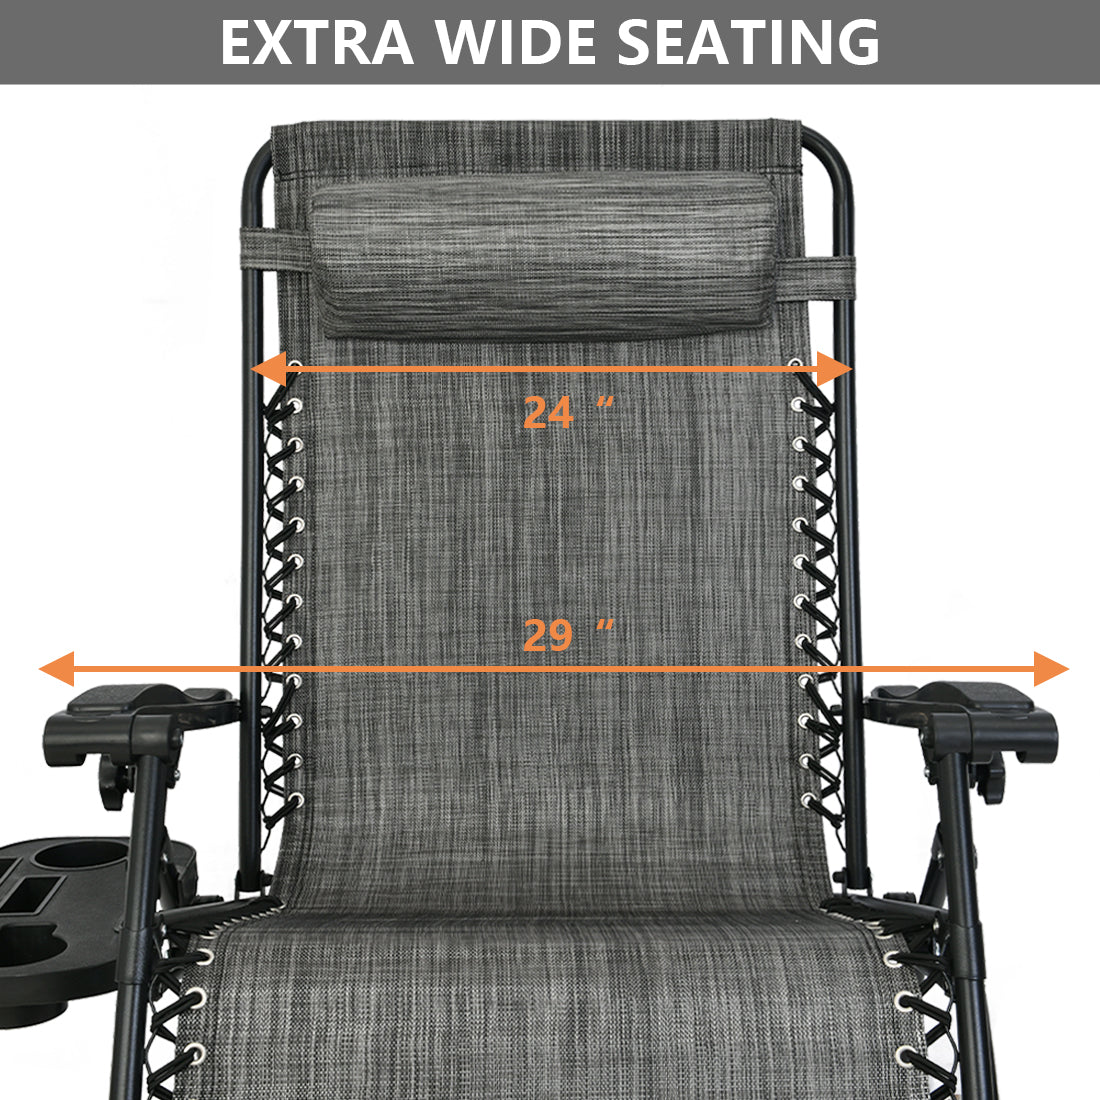 Patio Watcher Oversized Teslin Zero Gravity Chair Folding Recliner Chair